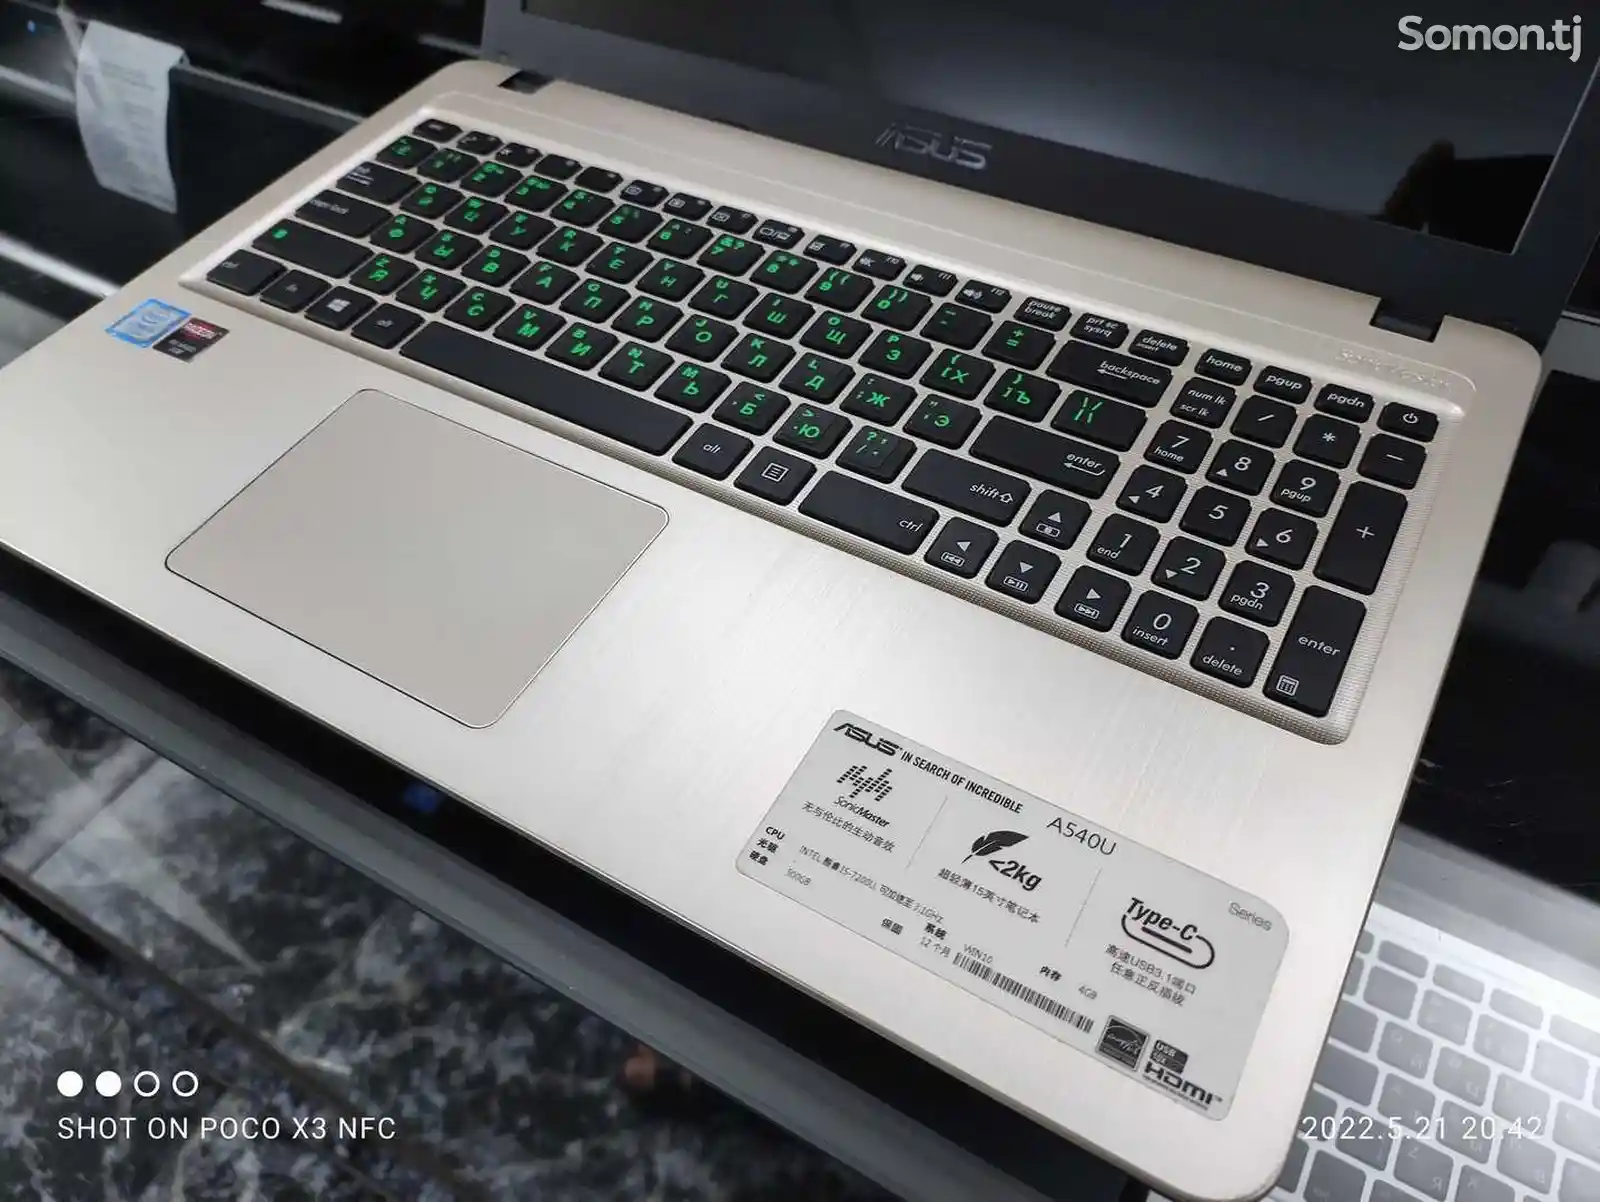 Игровой Ноутбук Asus X545U Core i5-7200U 4GB/500GB 7TH GEN-6